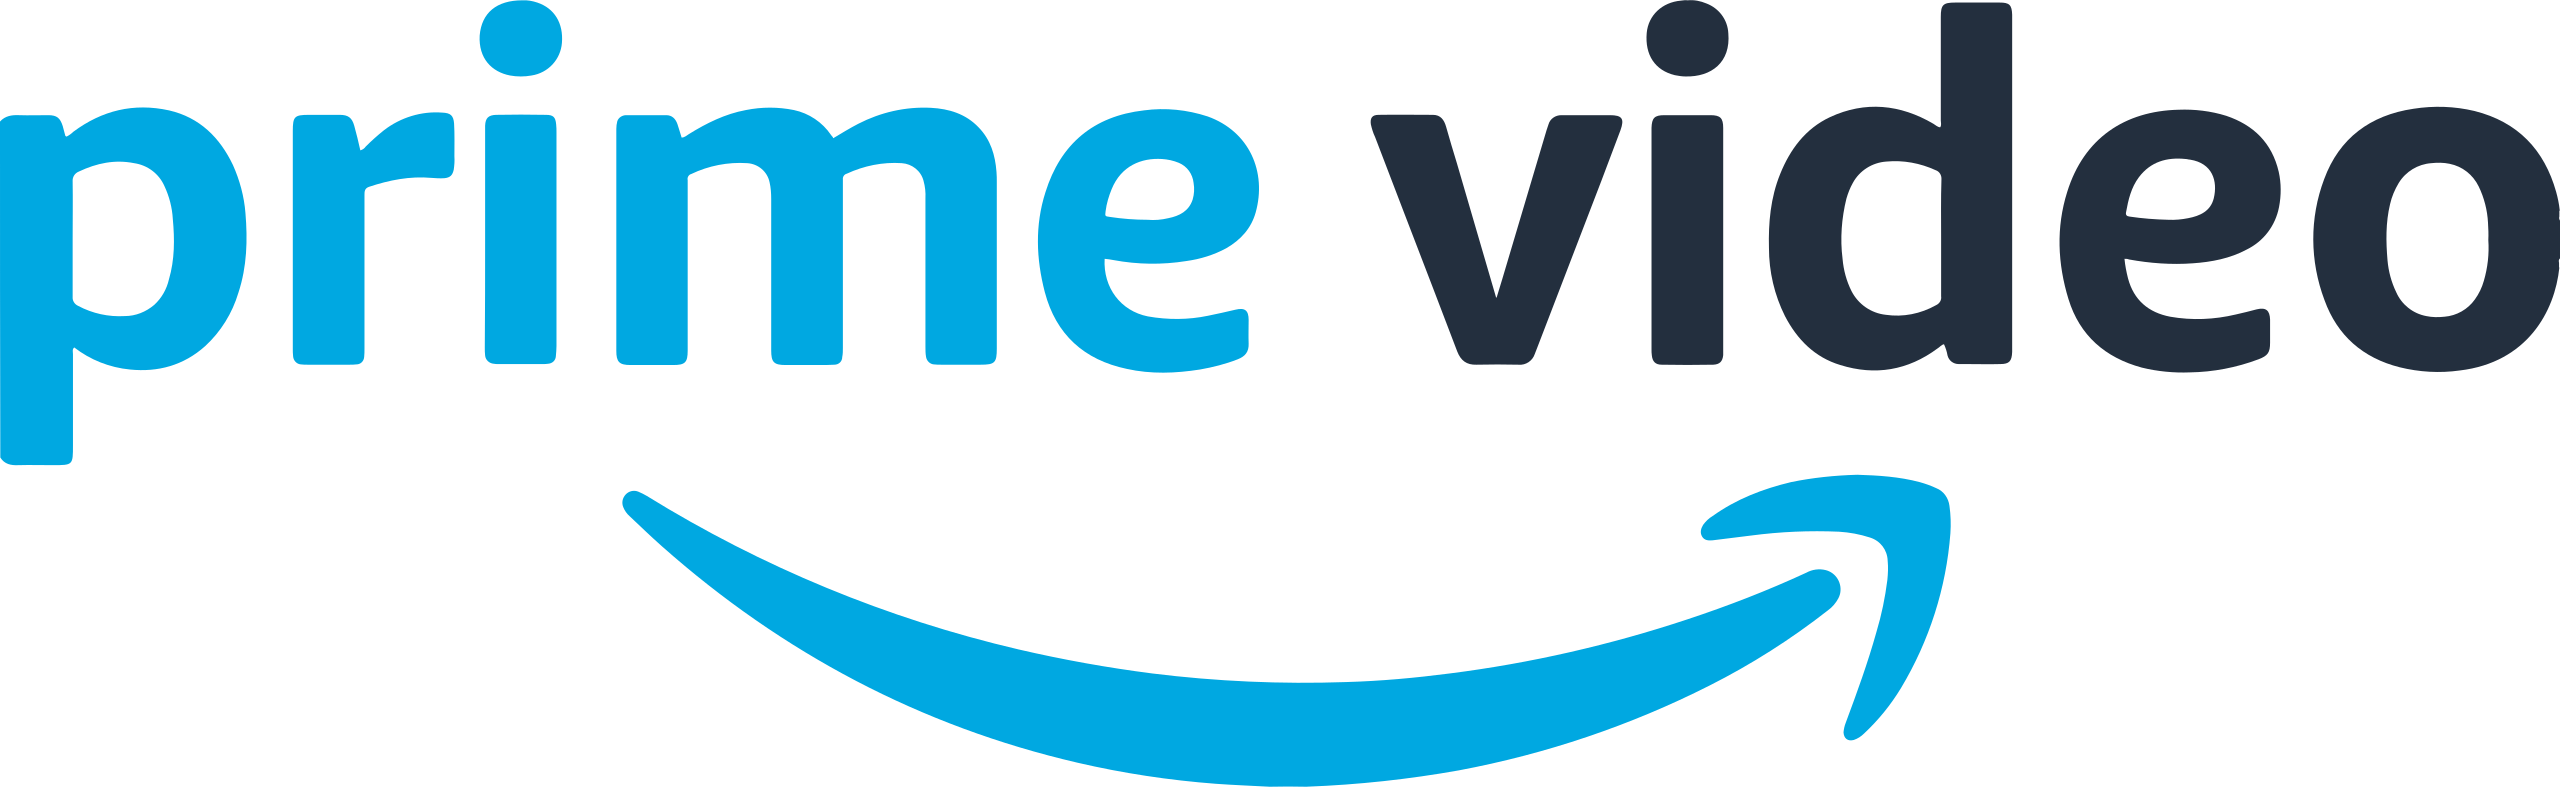 Amazon_Prime_Video_logo.svg